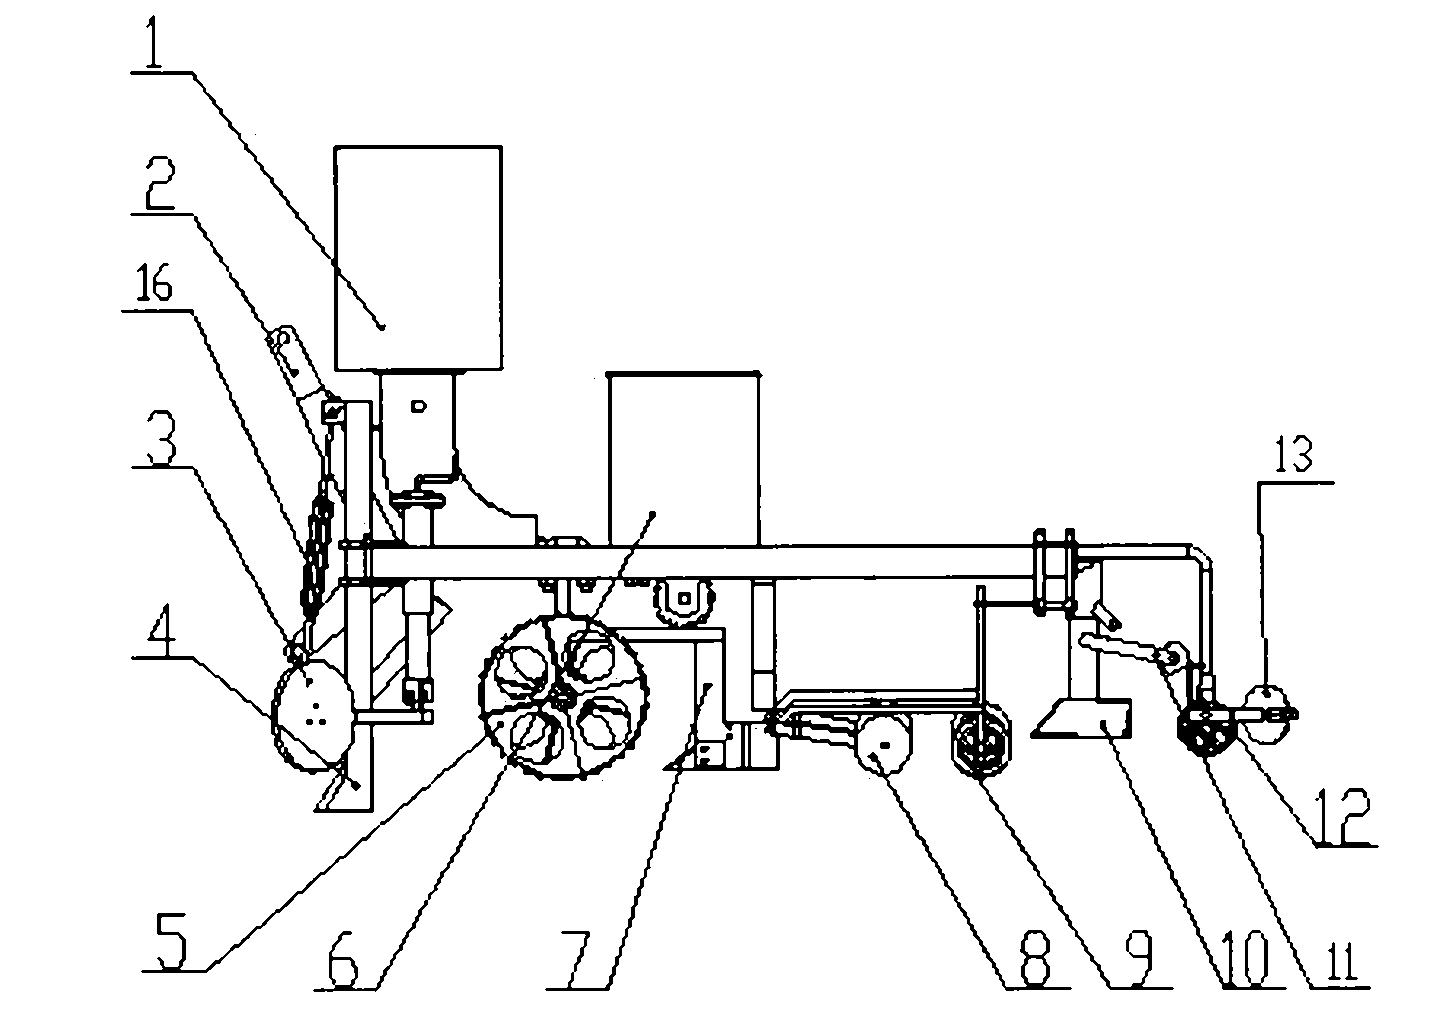 Plastic film mulching machine for cotton furrow sowing in saline-alkali soils